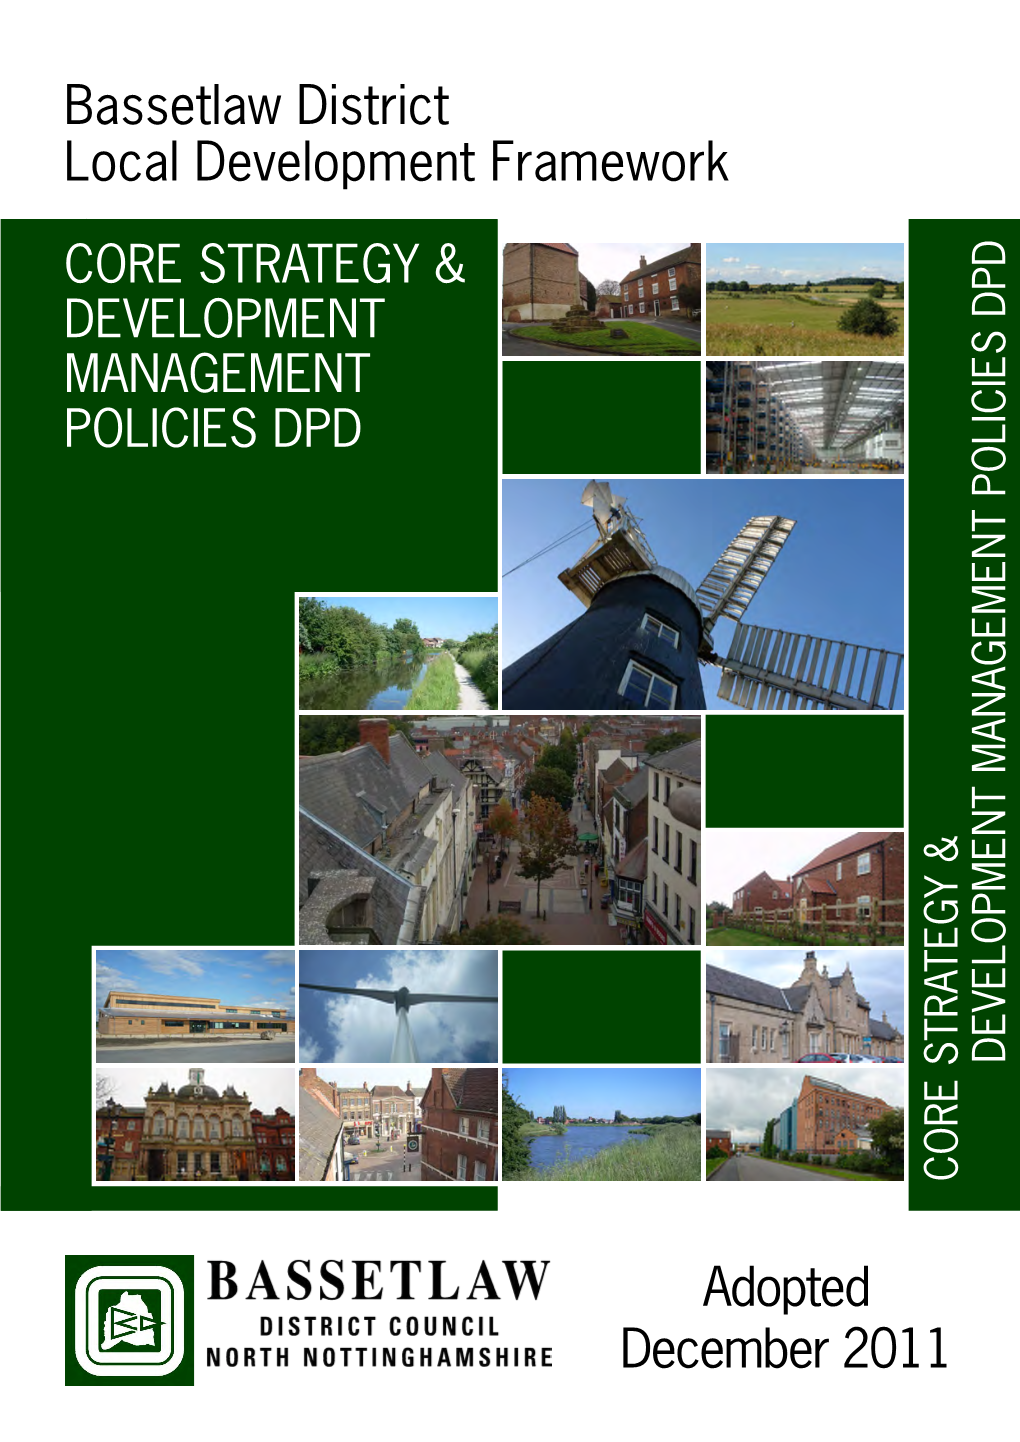 Core Strategy & Development Management Policies